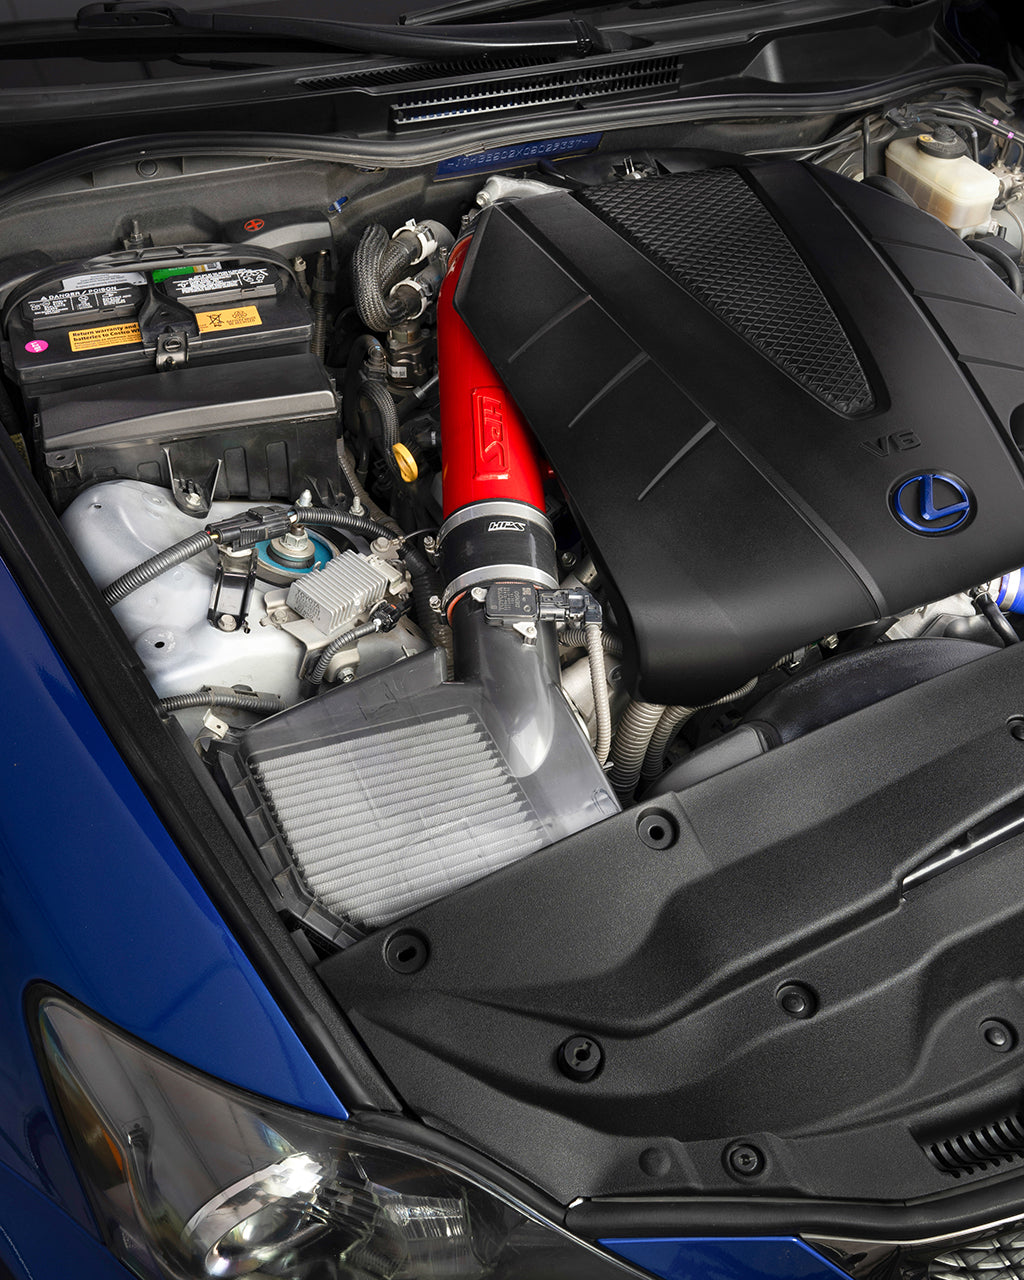 HPS Red Cold Air Intake Kit Post MAF Tube + High Flow Filter Installed 2006-2013 Lexus IS250 2.5L V6 827-710R